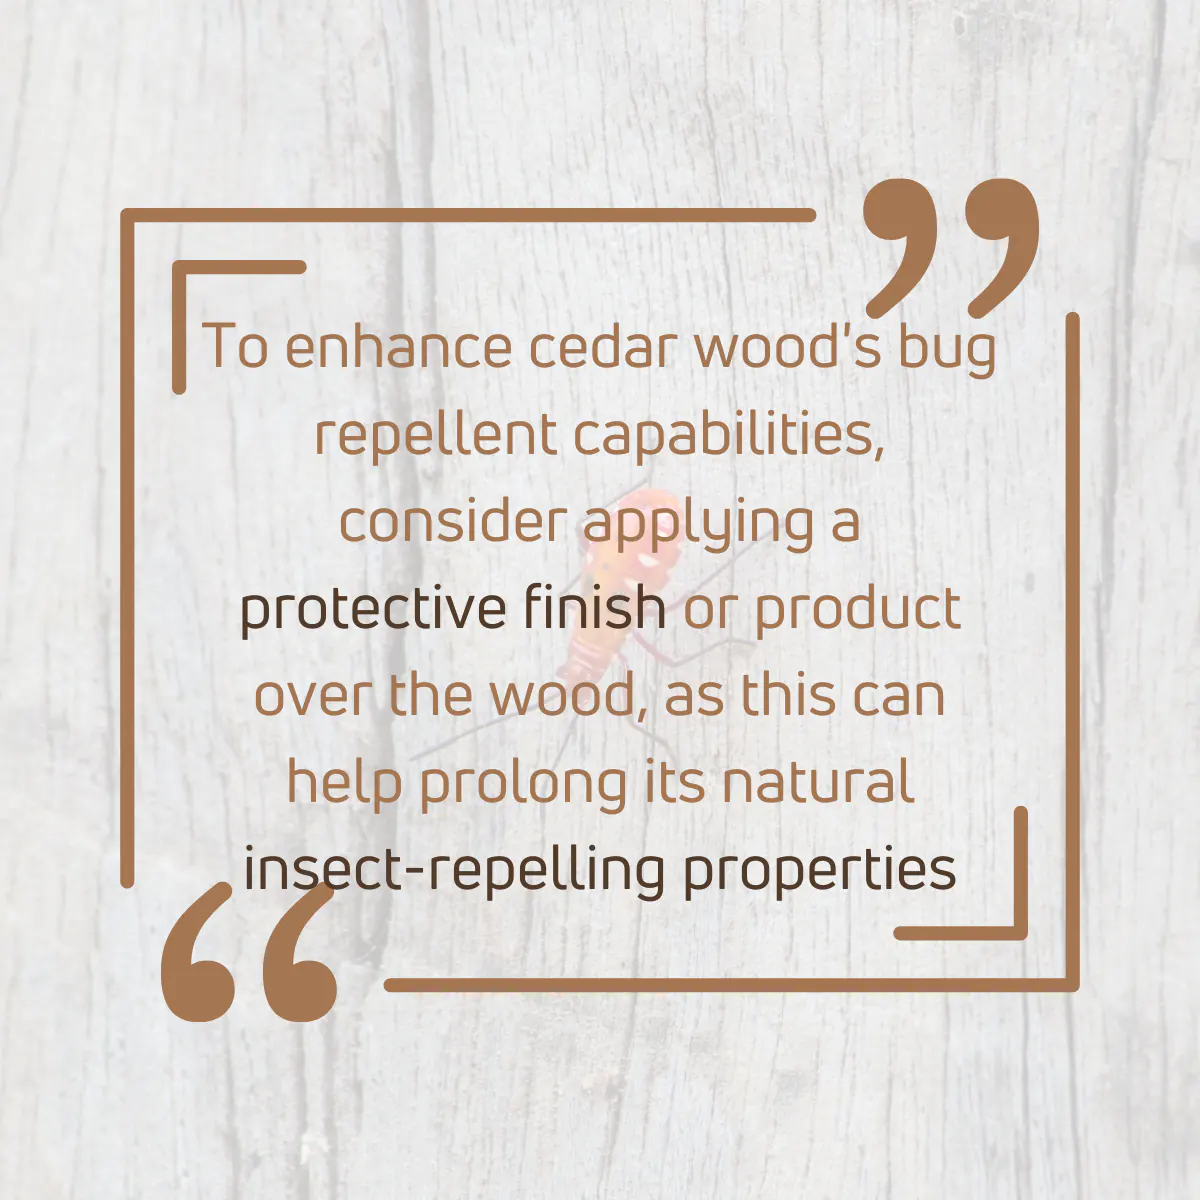 Cedar Bug repellent ability